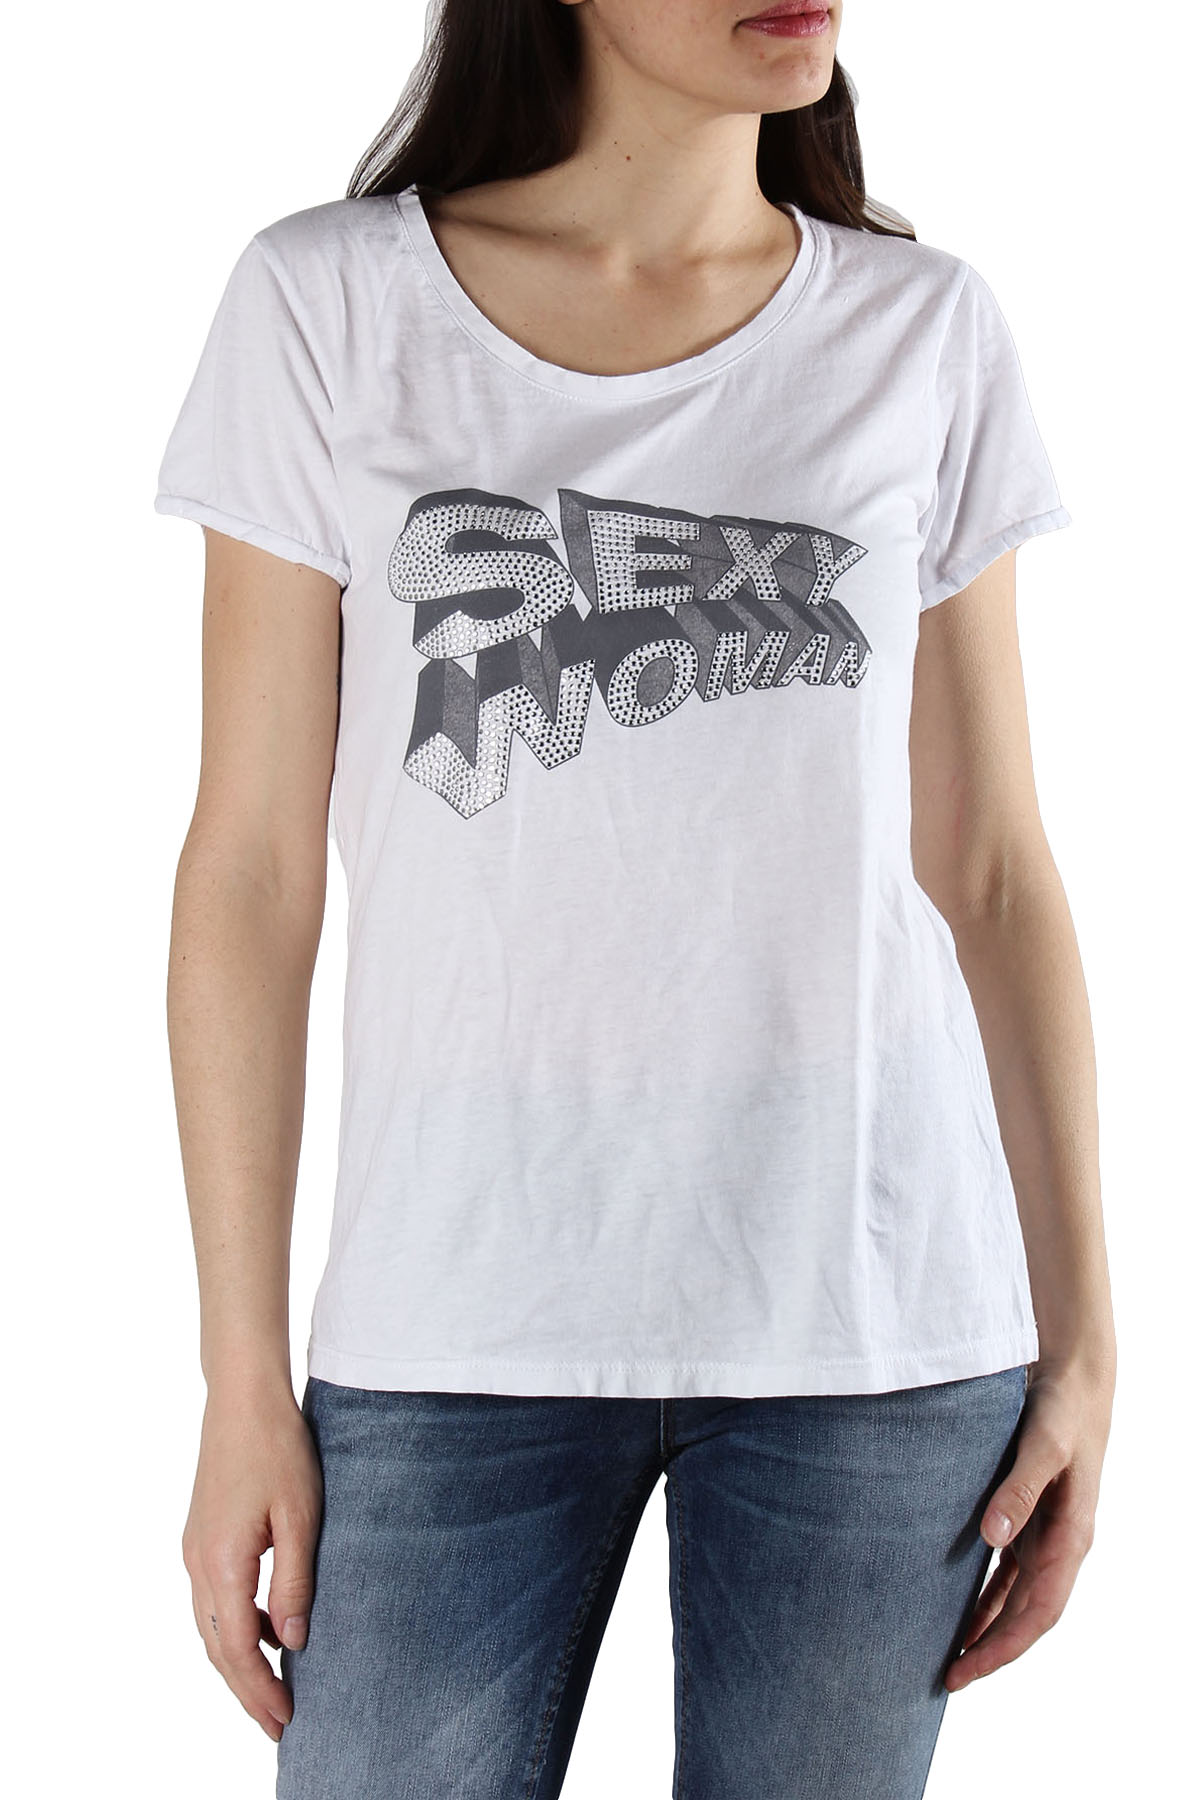 sexy woman - t-shirt